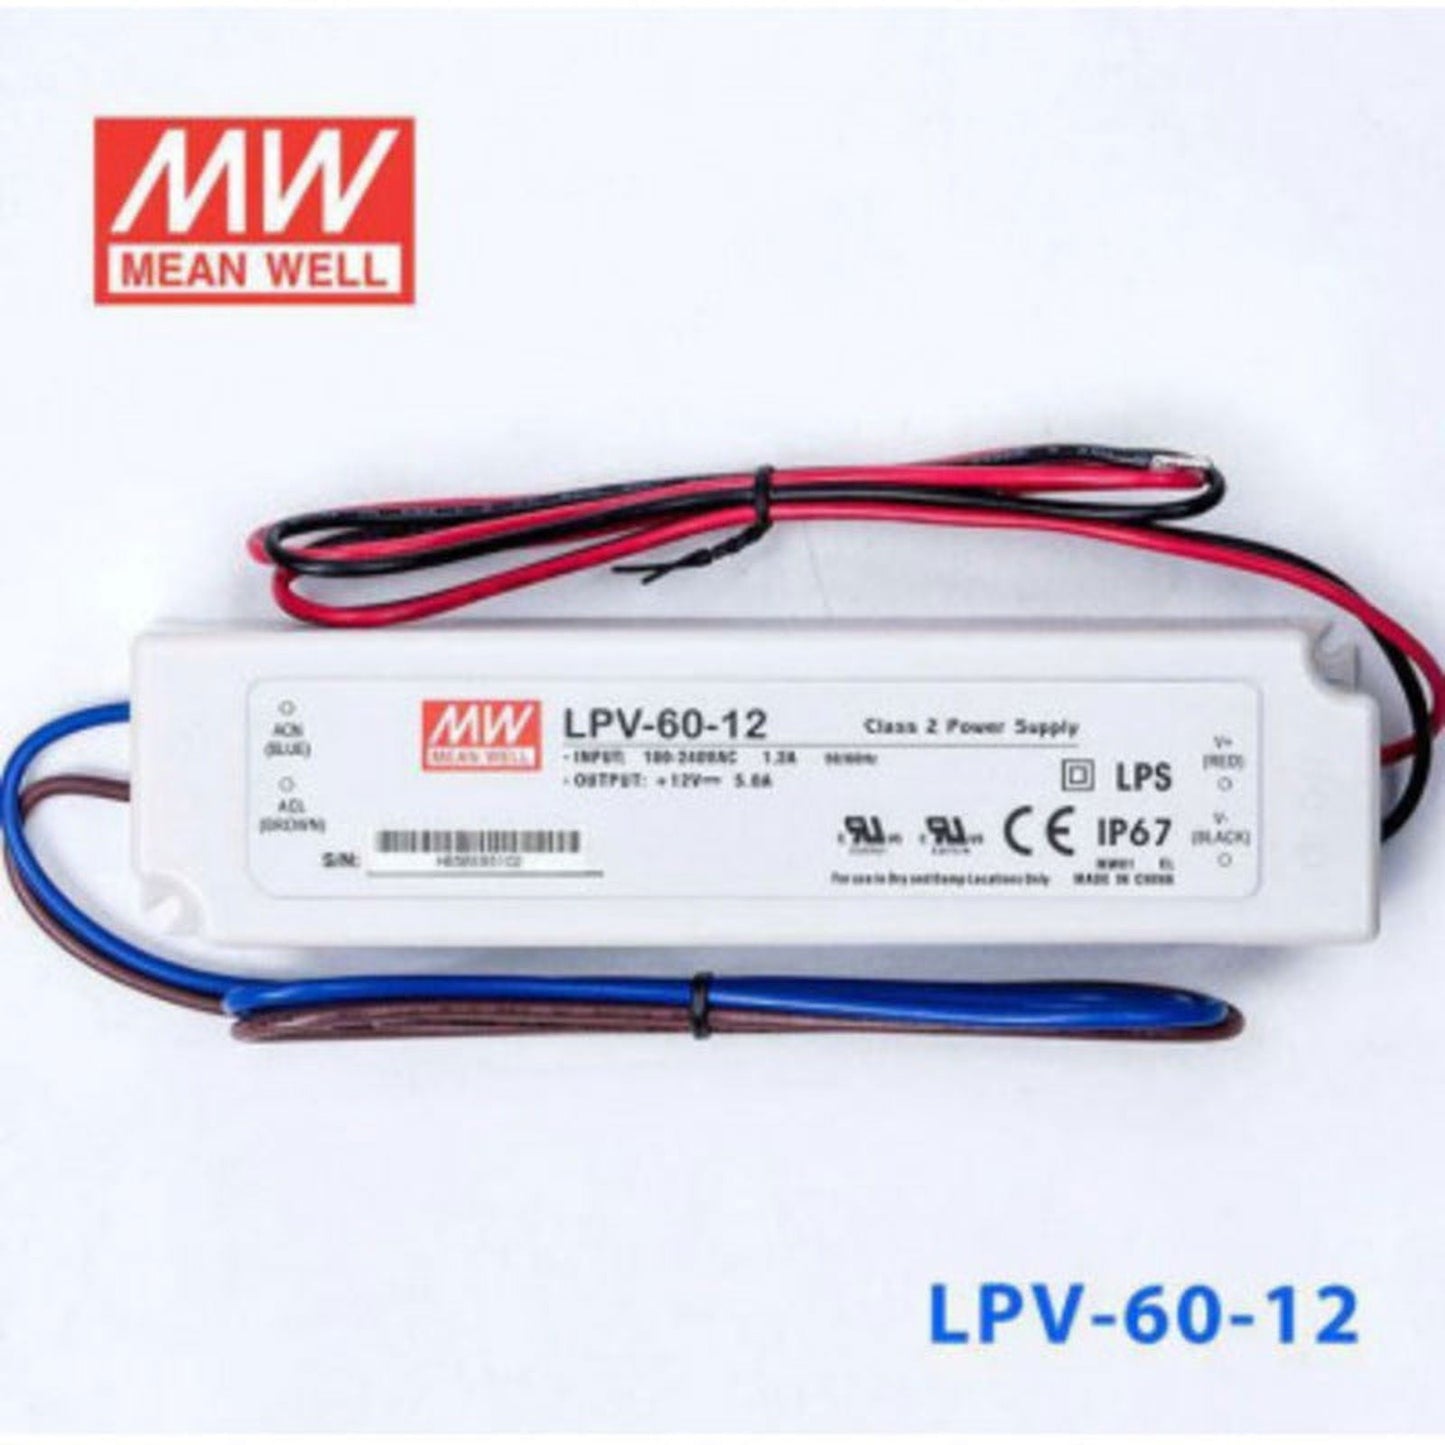 Mean well 12vx5a Constant Voltage Drivers LPV-60-12 IP67 - voltkart -  - 